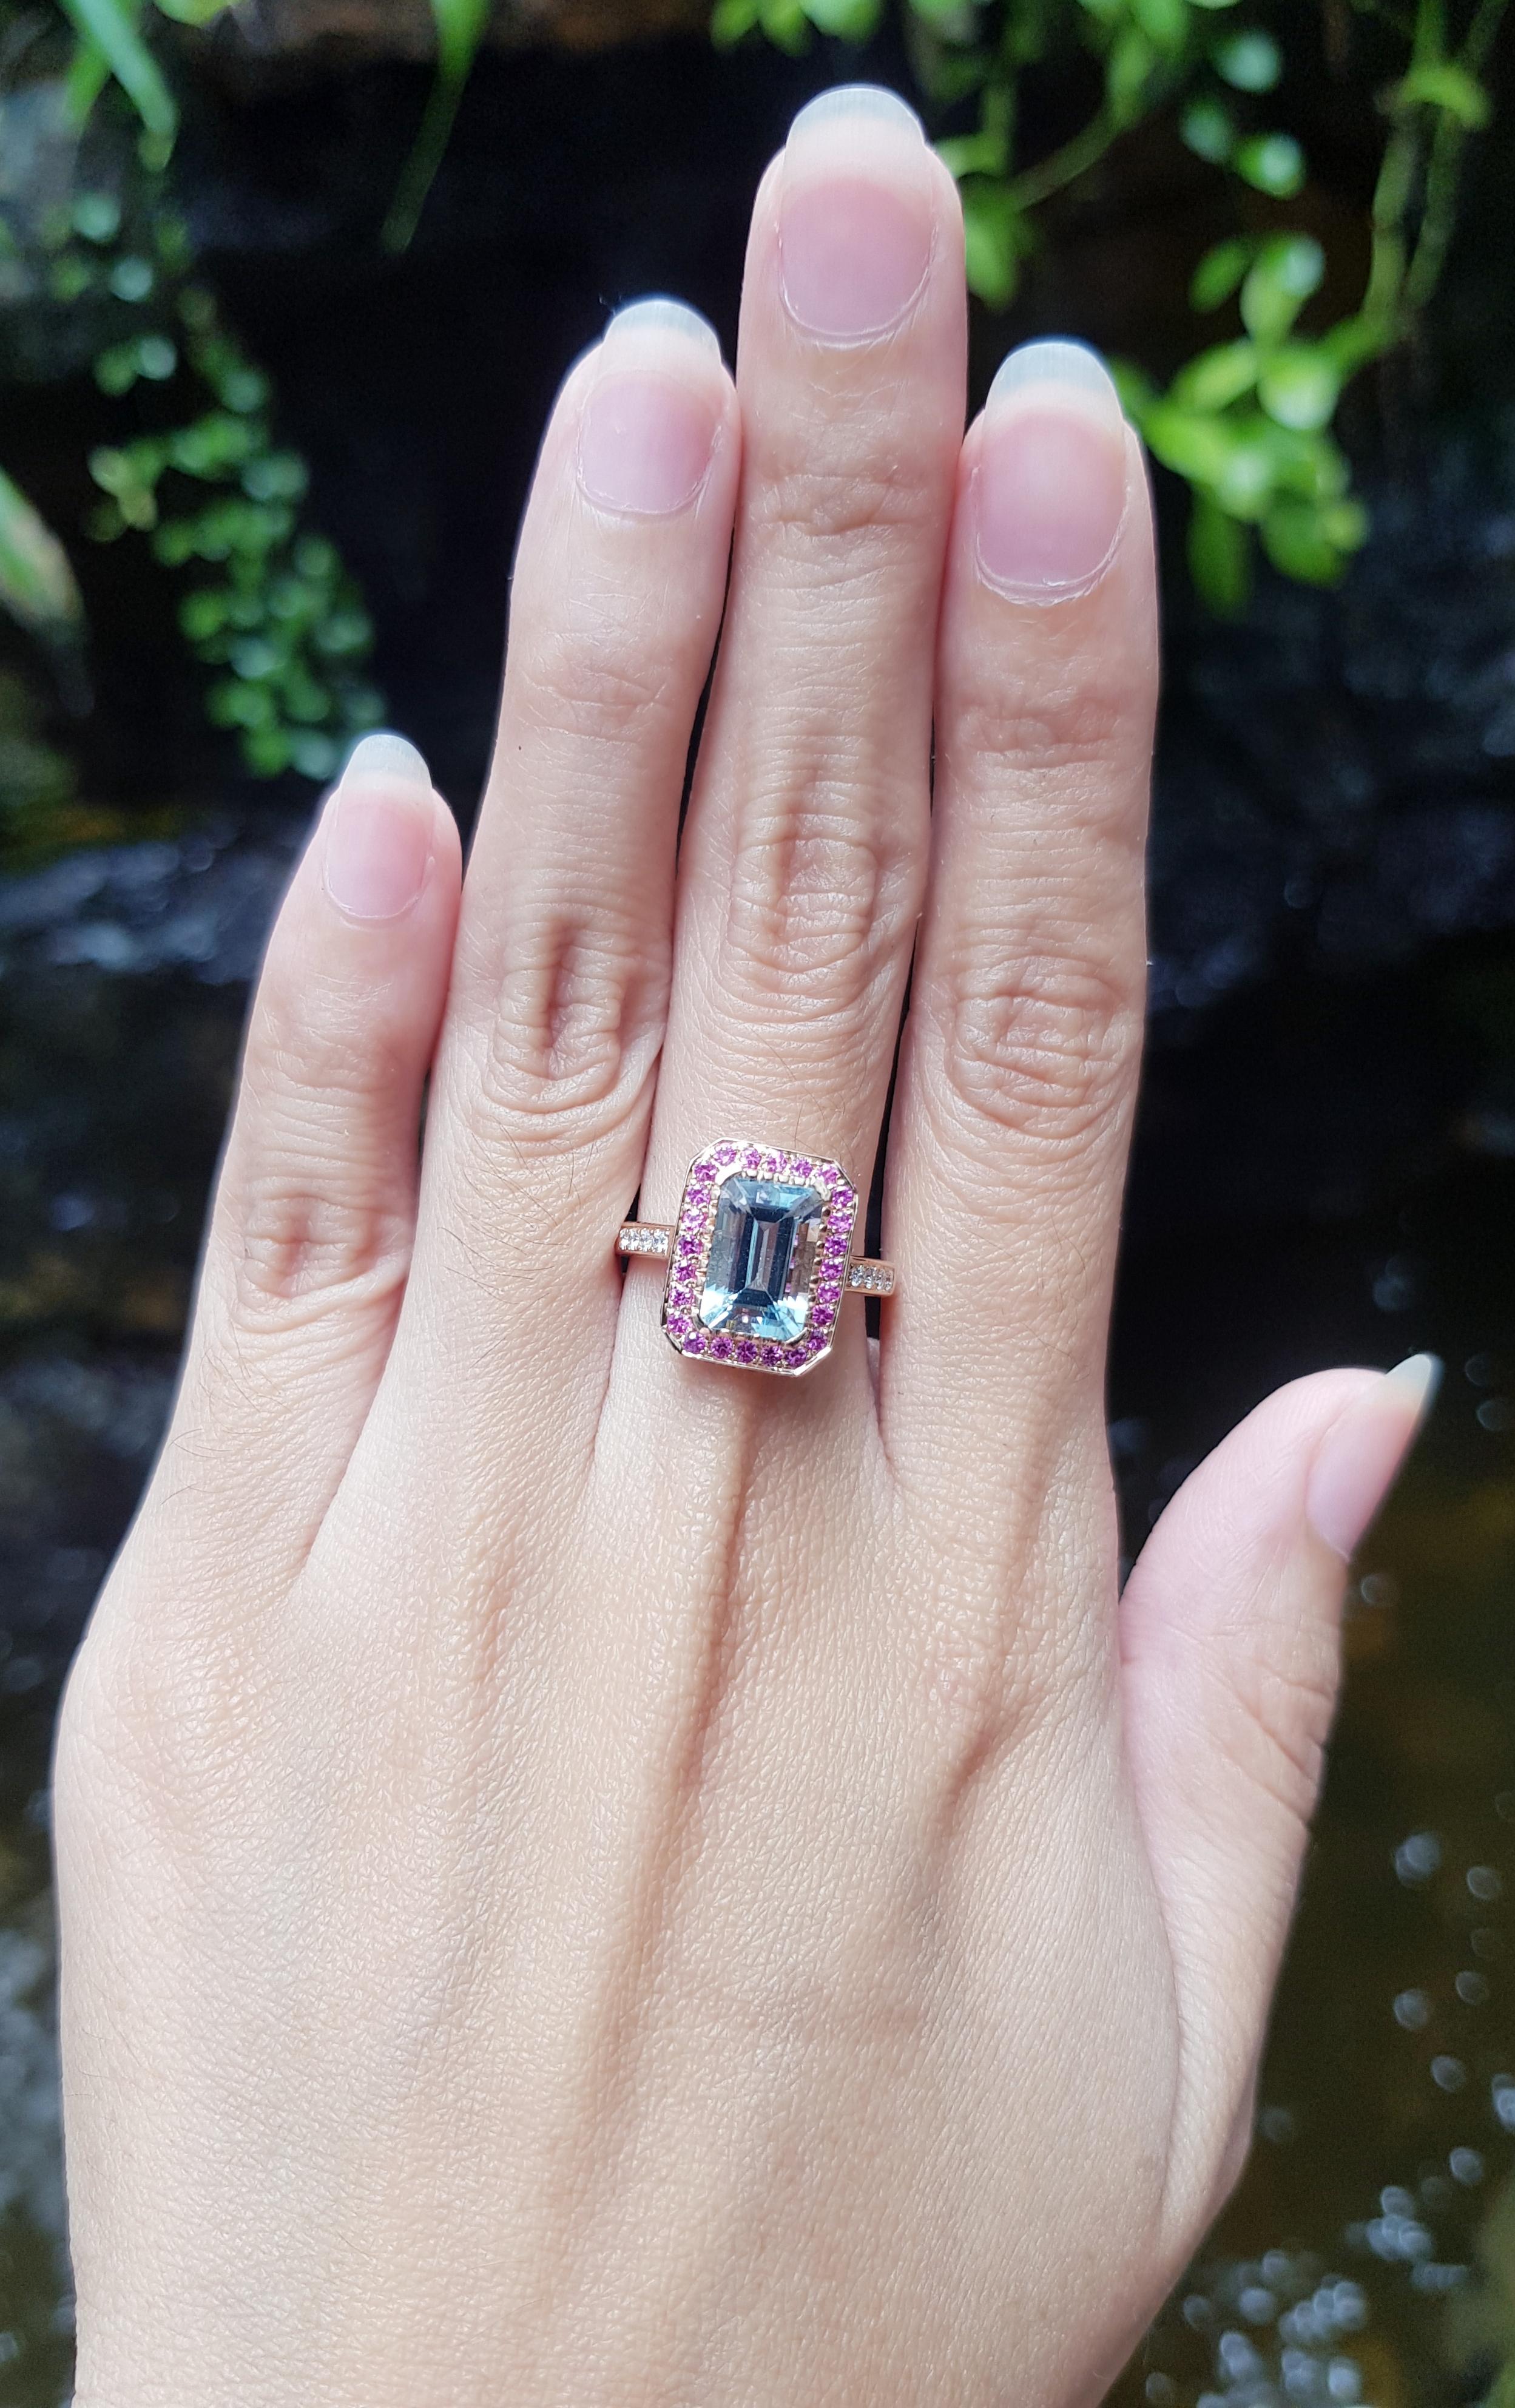 Aquamarine 2.08 carat, Pink Sapphire 0.57 carat and Diamond 0.10 carat Ring set in 18 Karat Rose Gold Settings

Width:  1.1 cm 
Length: 1.5 cm
Ring Size: 53
Total Weight: 4.68 grams


